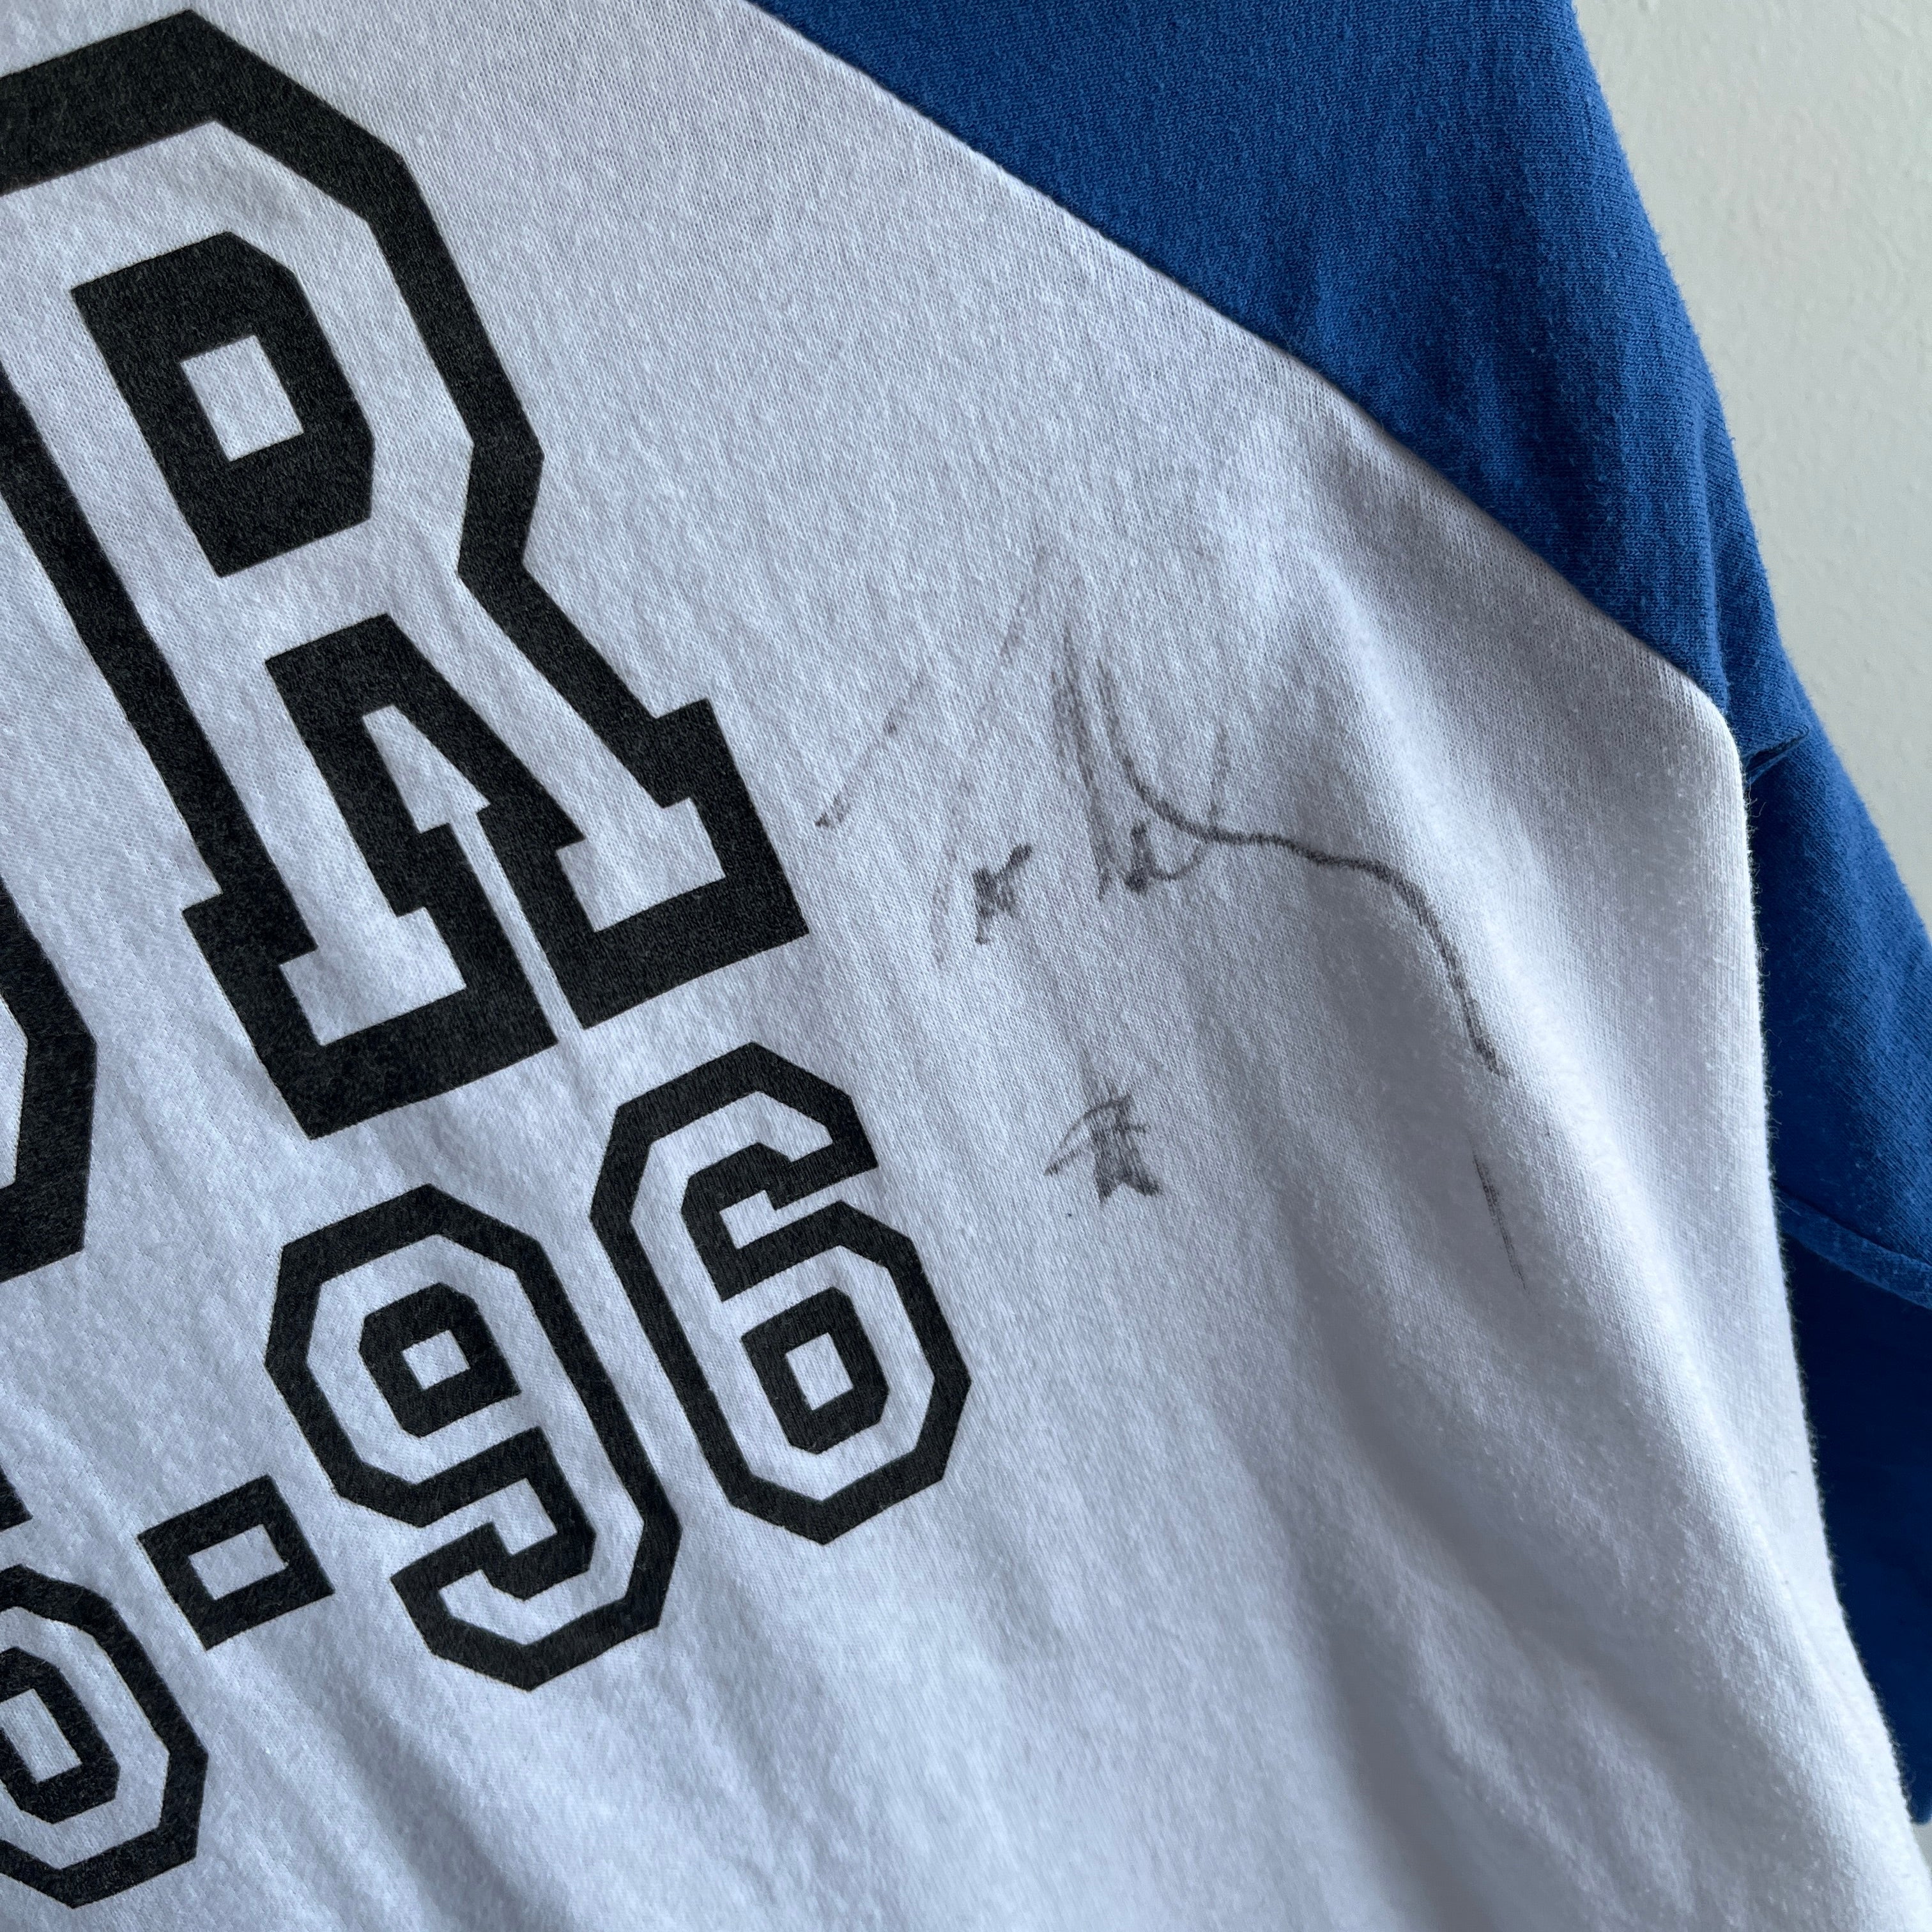 1995/6 The Nixons Tour Signed Baseball T-Shirt